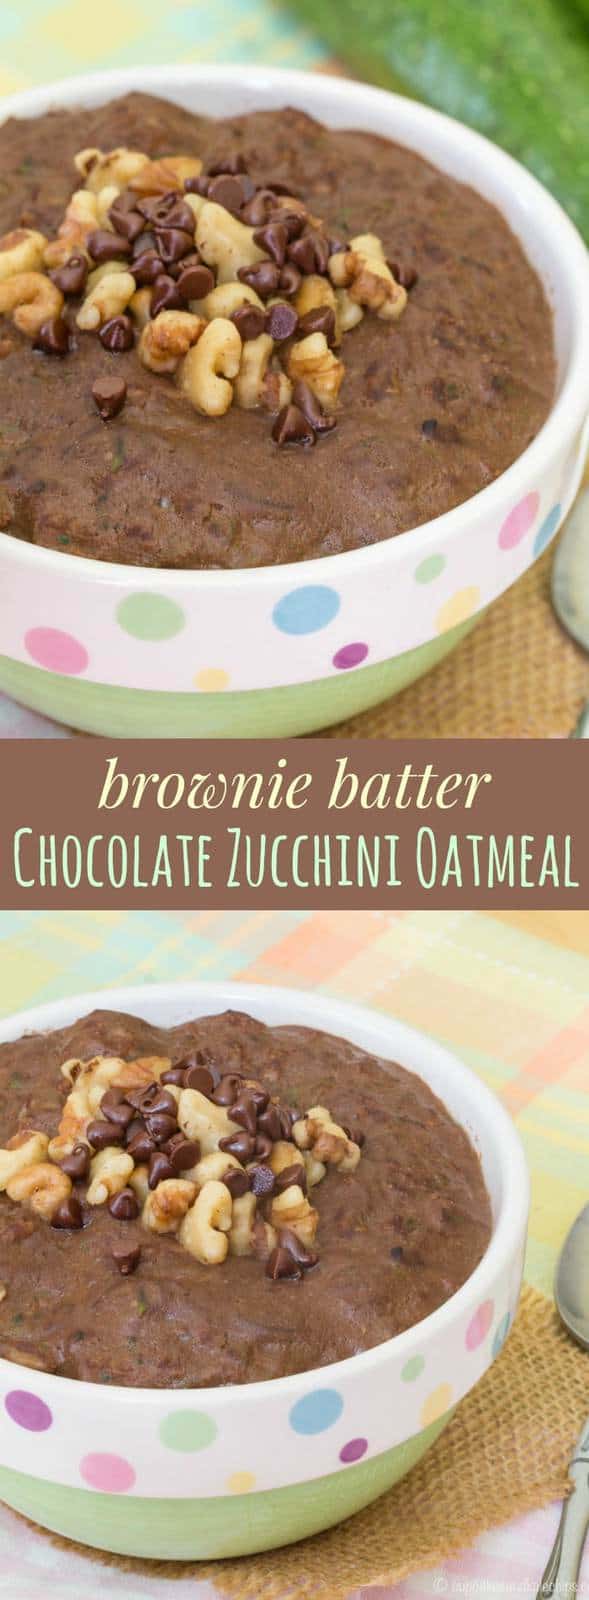 Brownie Batter Chocolate Zucchini Oatmeal - Cupcakes ... - 589 x 1600 jpeg 65kB